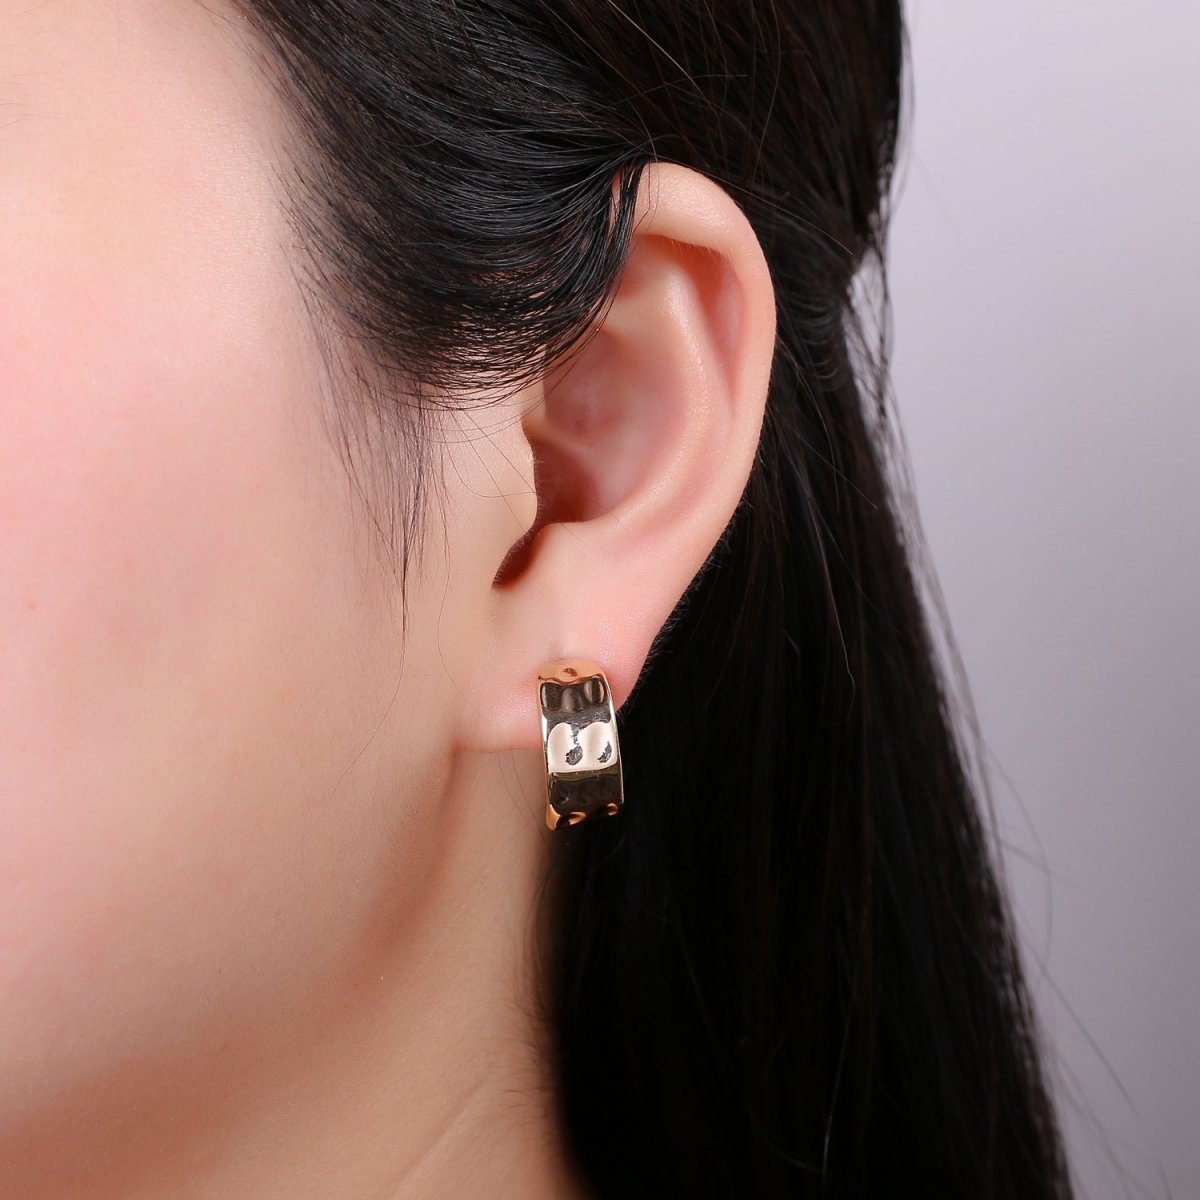 OS Gold Hammered Hoop Earrings Gold Filled Hammered Earrings, Textured Hoop Earrings, Vintage Style, Gold Minimalist Earrings K-406 - DLUXCA